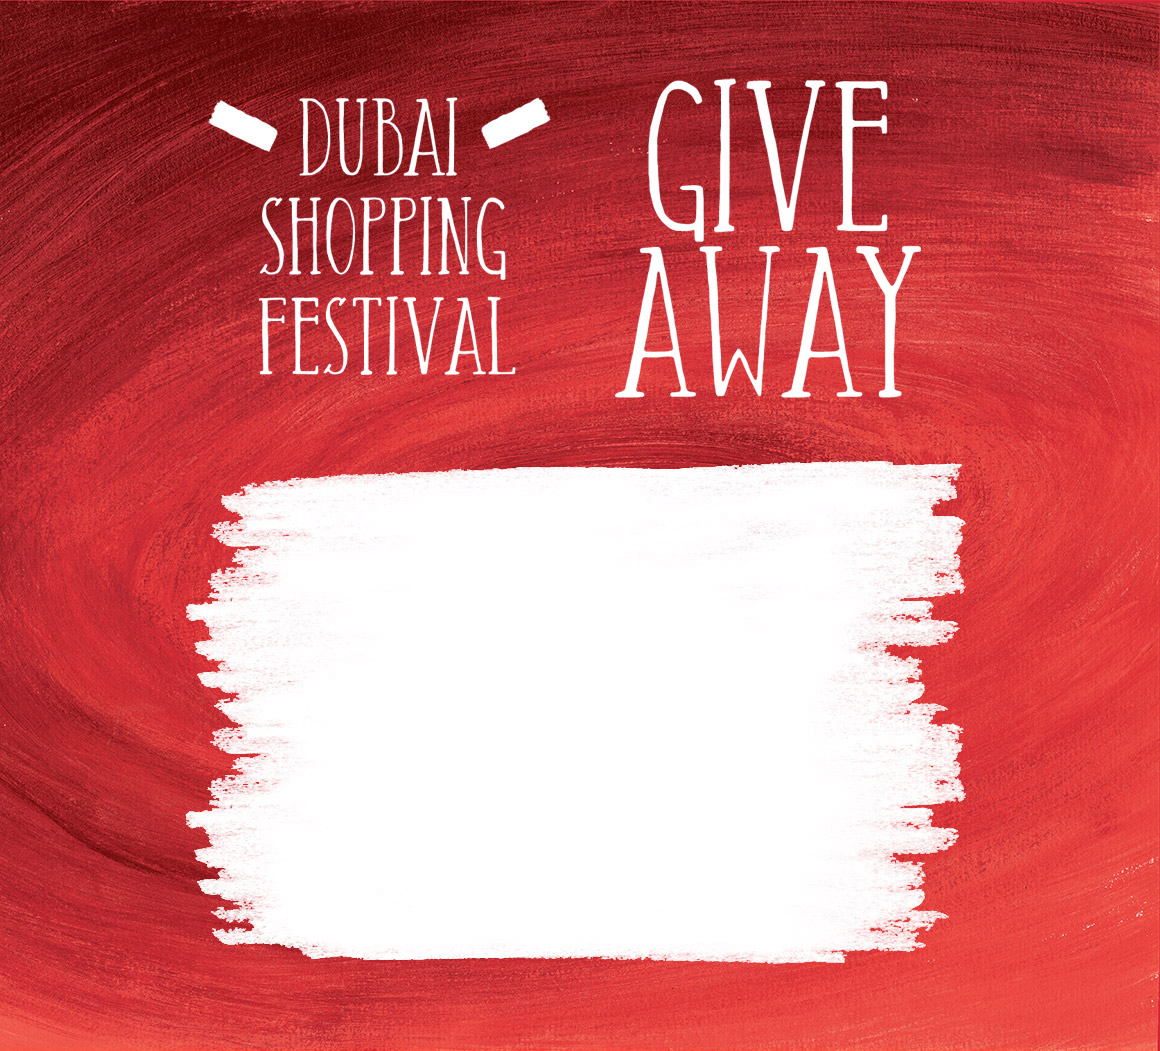 Dubai Shopping Festival - Giveaway